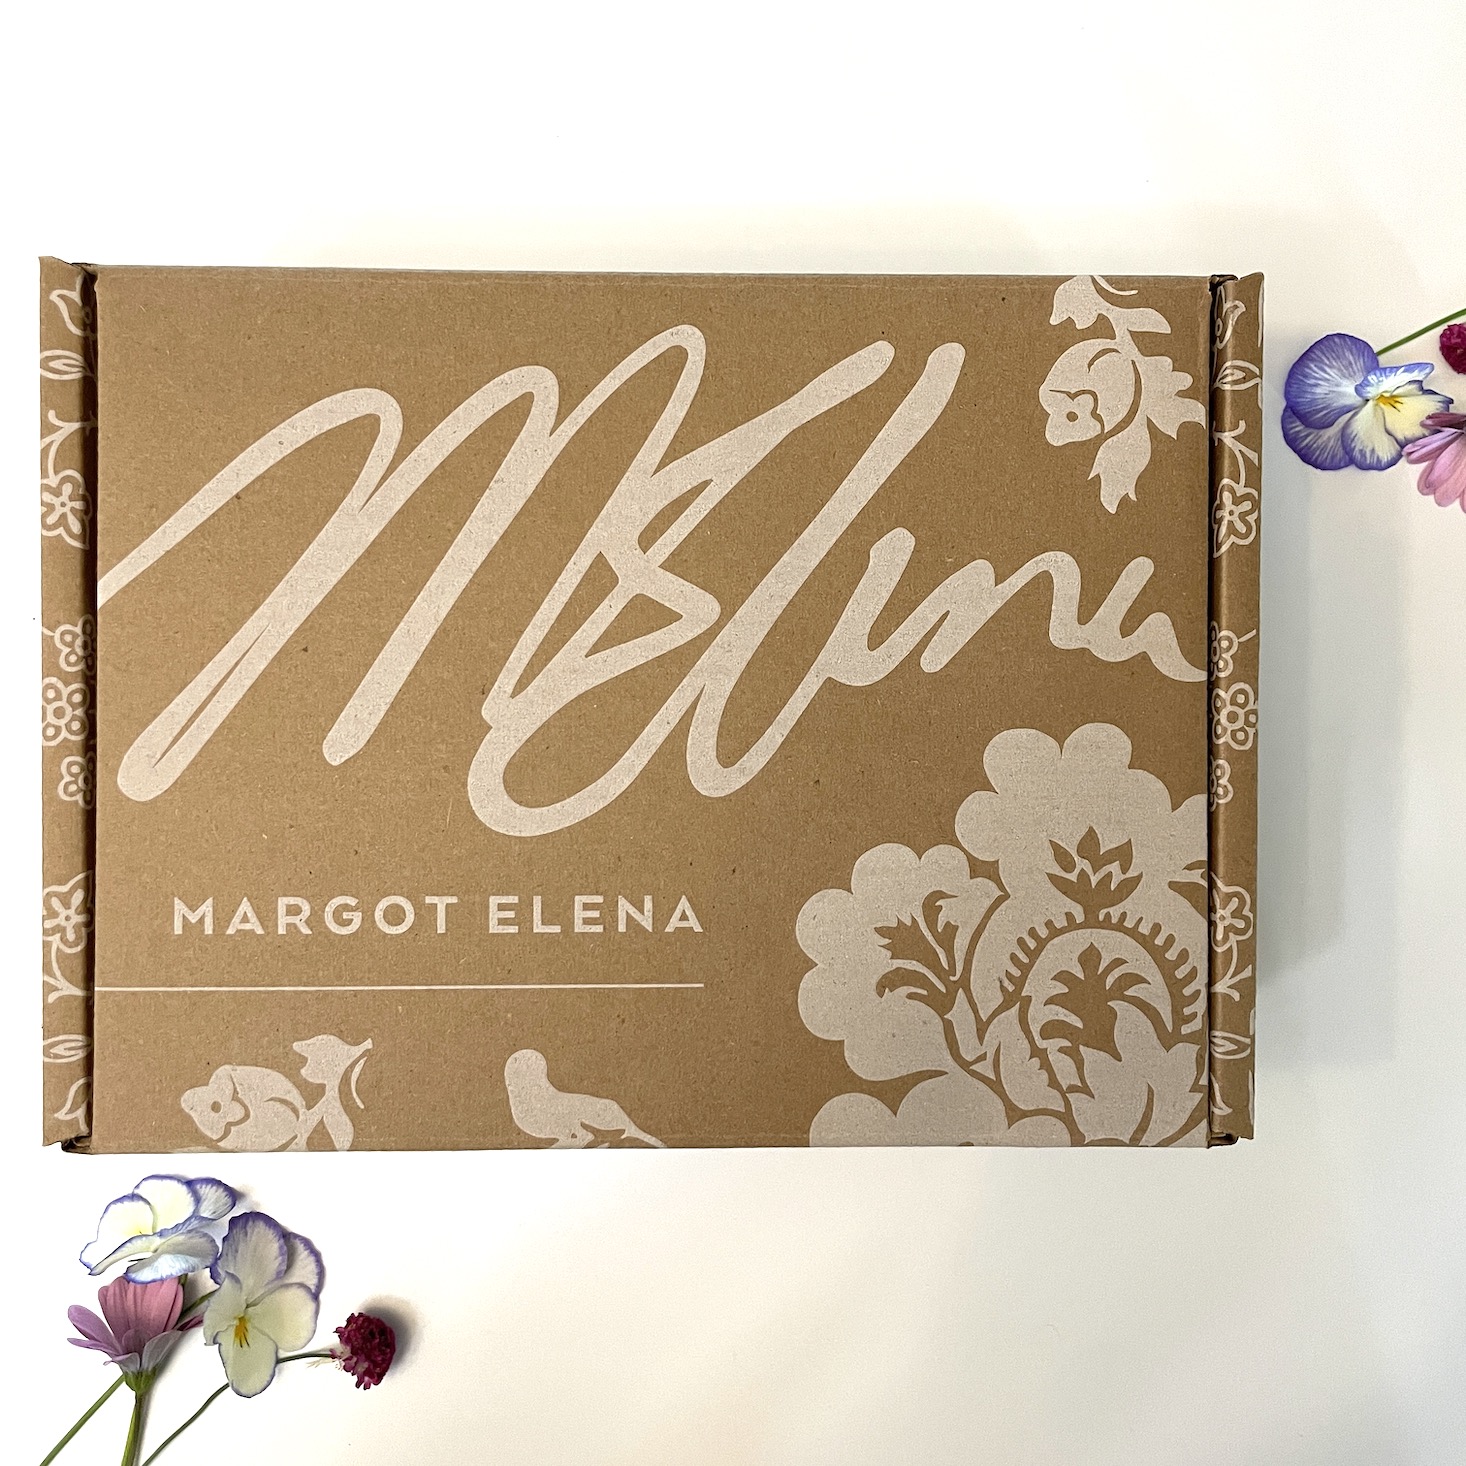 Margot Elena Subscription Box Review + Exclusive MSA Coupon Summer